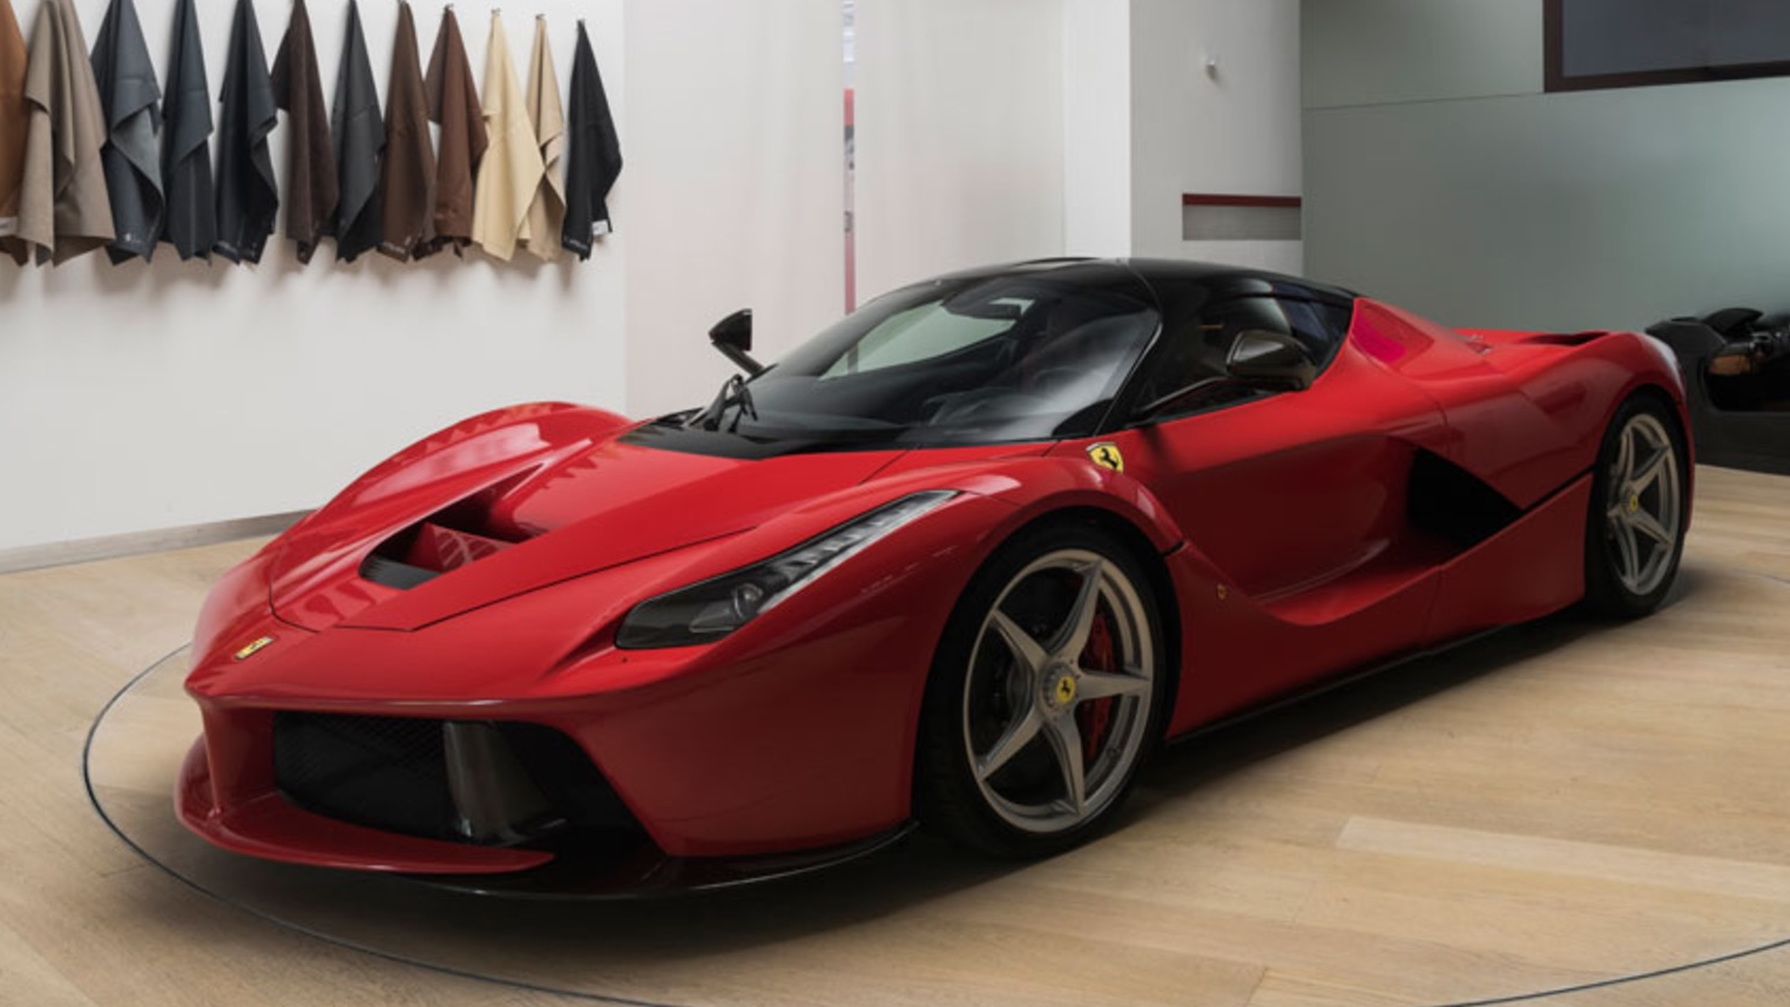 Ferrari LaFerrari prototype sold for $2.25 million